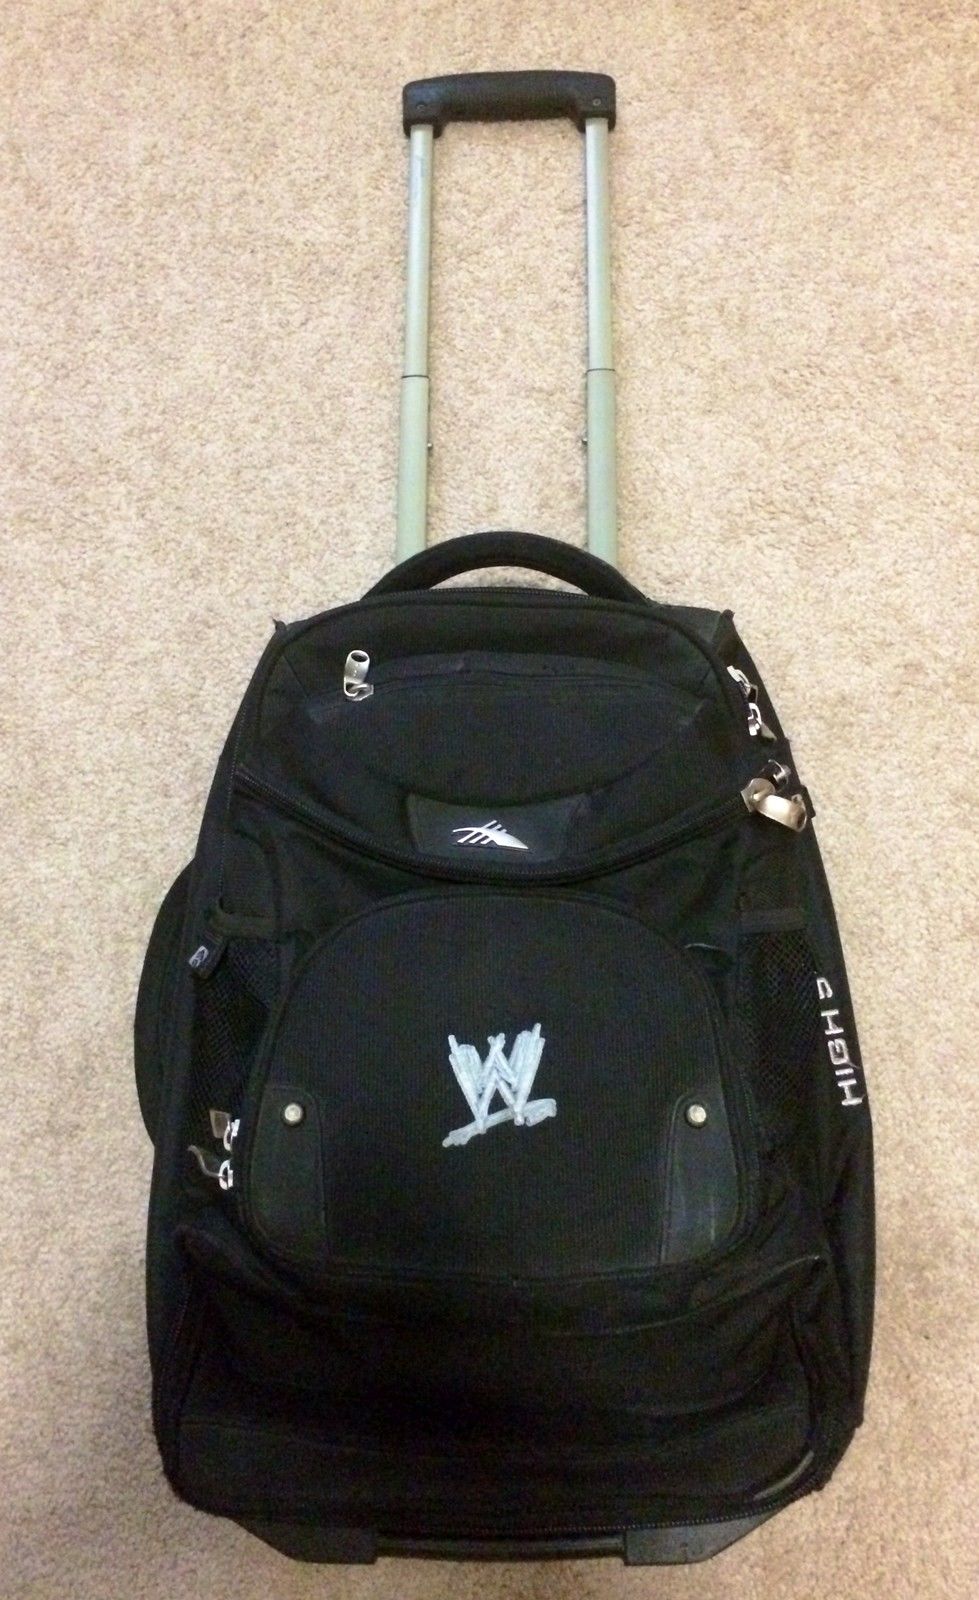 Curt Hawkins WWE travel bag